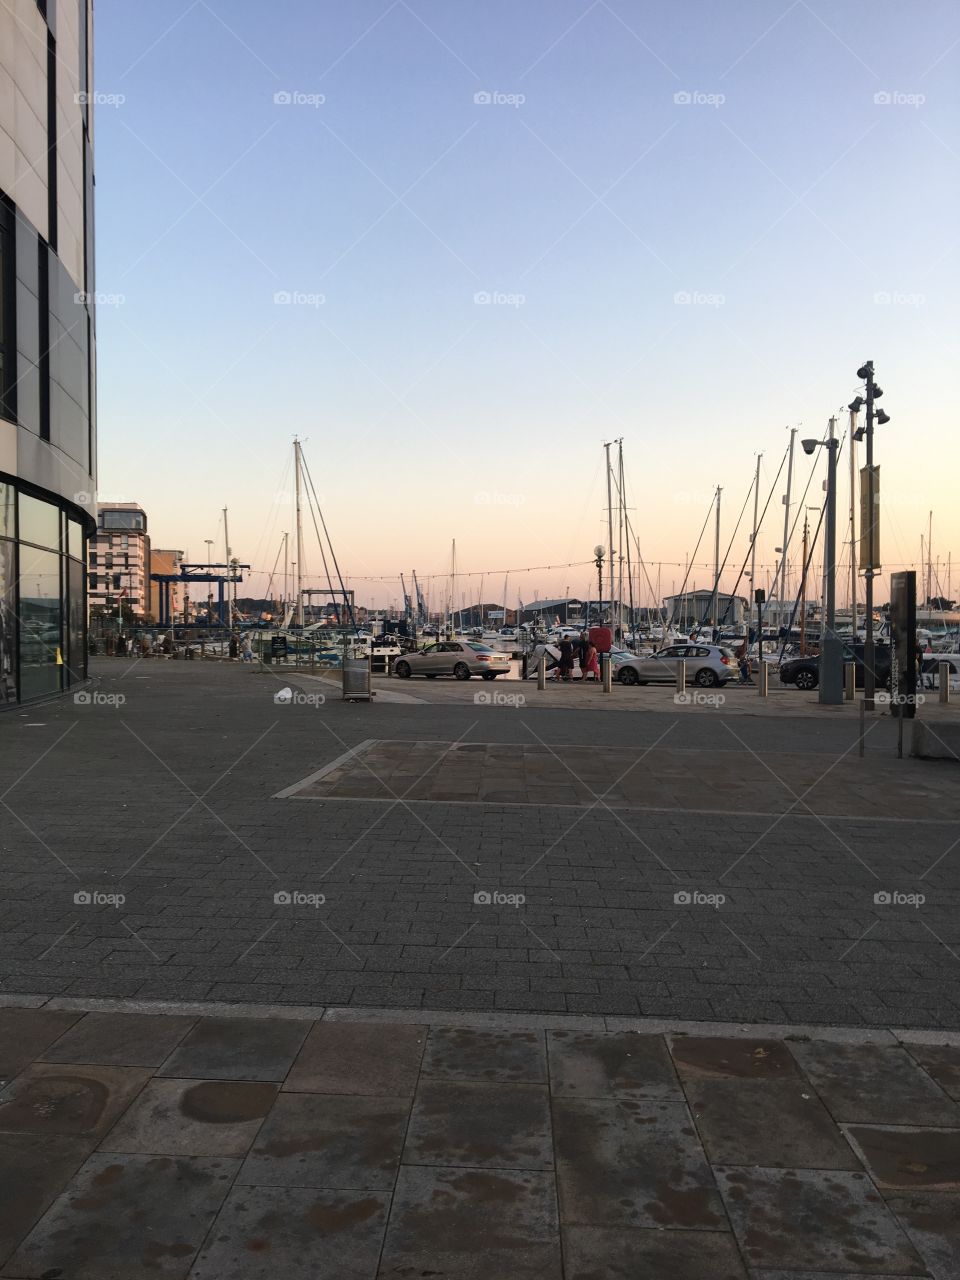 Ipswich docks